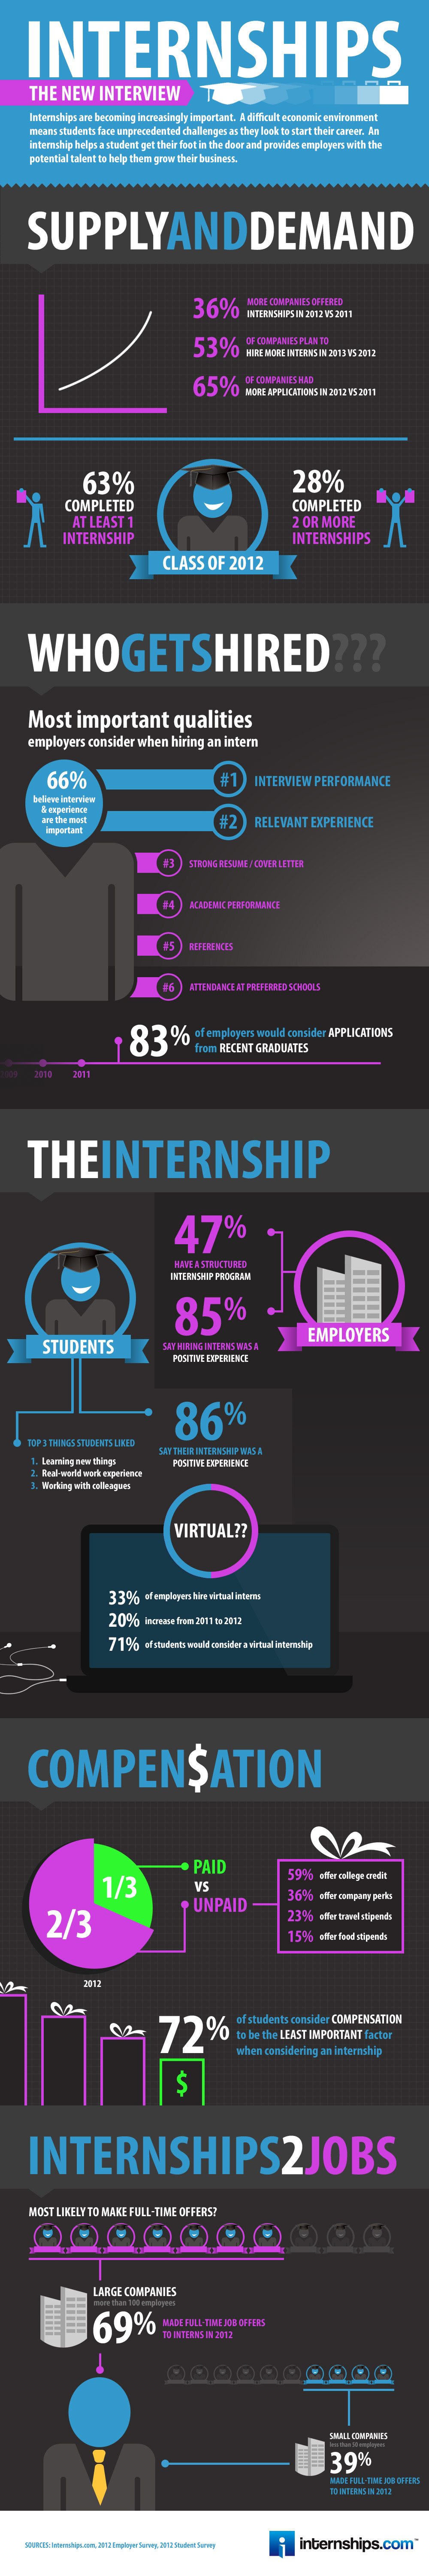 internships infographic 2012 Infographic: Internships Survey and 2013 Internship Trends